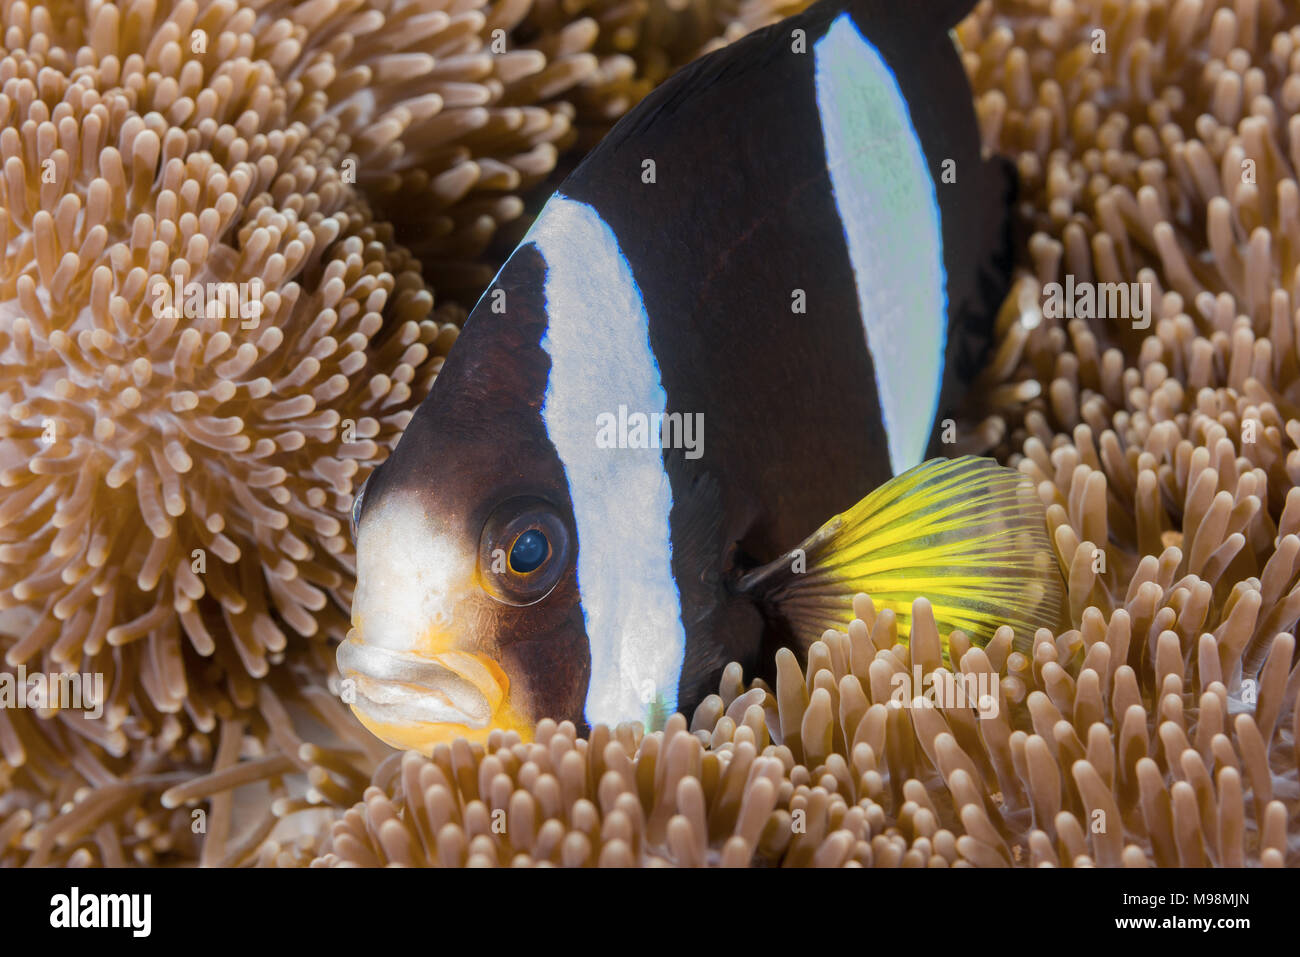 Clark (anemonefish Amphiprion clarkii) in anemone Foto Stock